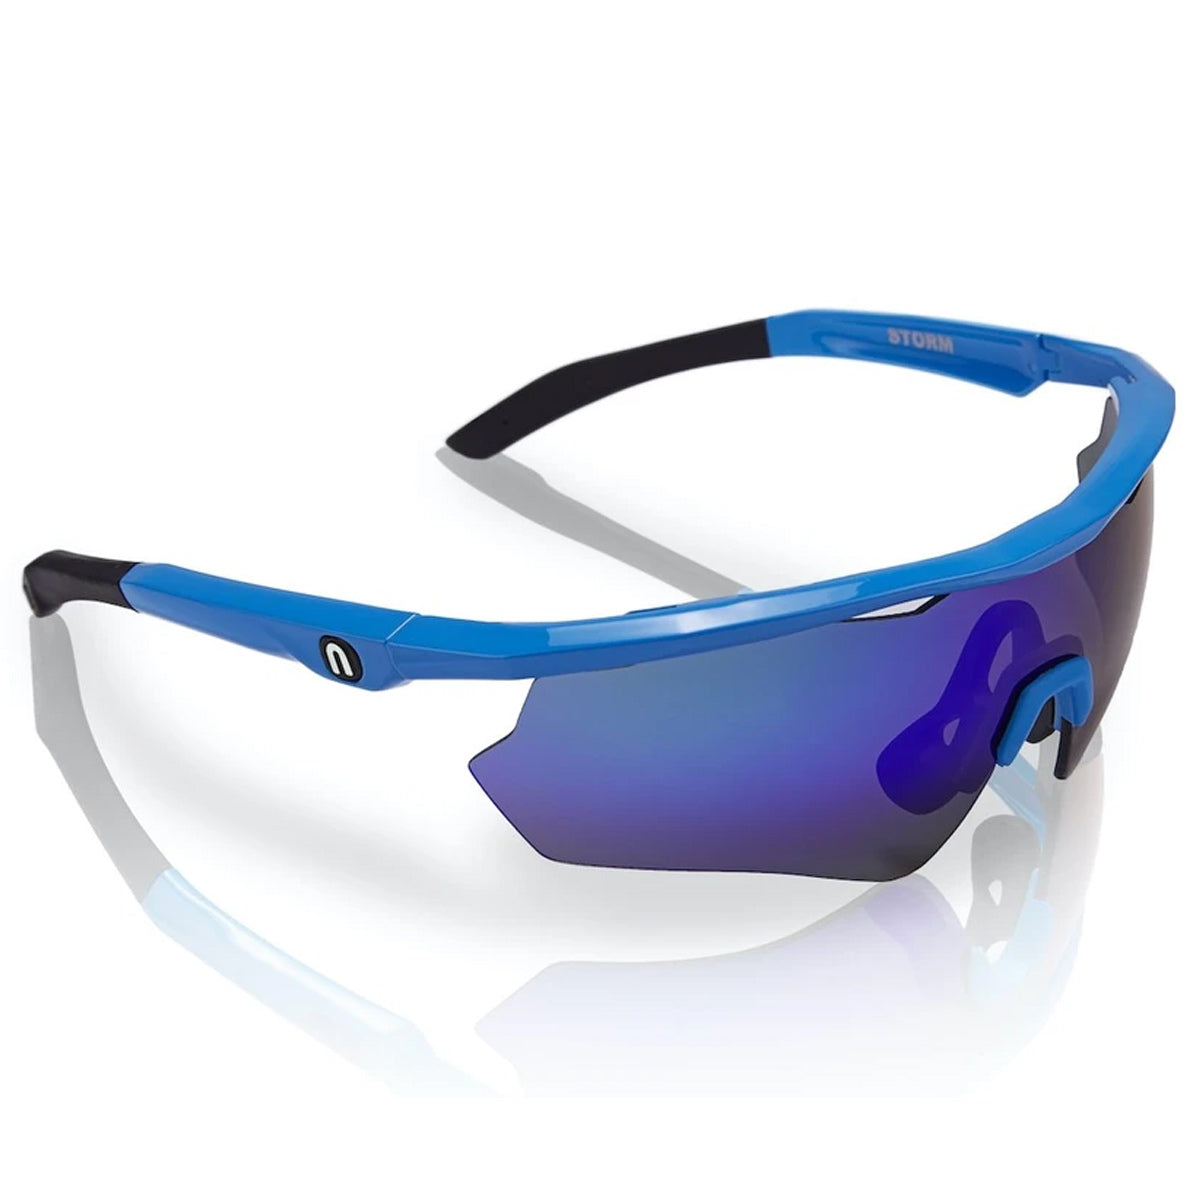 Neon Storm Photo sunglasses - Cyan Mirror Blue | All4cycling